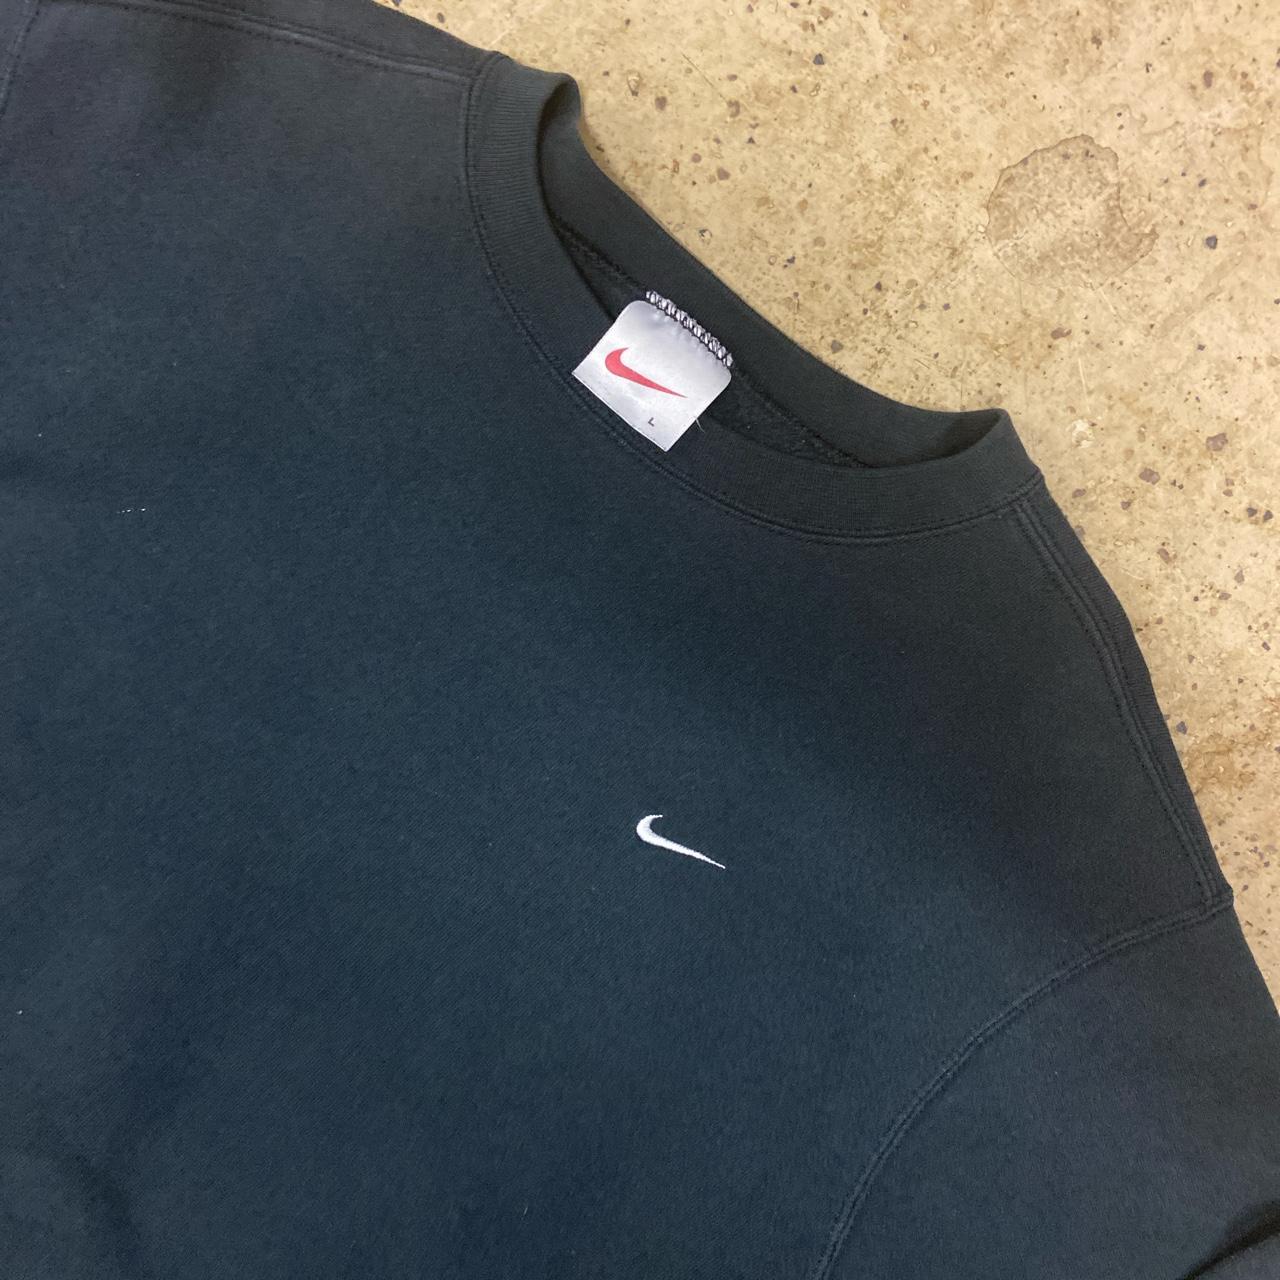 Nike Men's Black Sweatshirt (3)